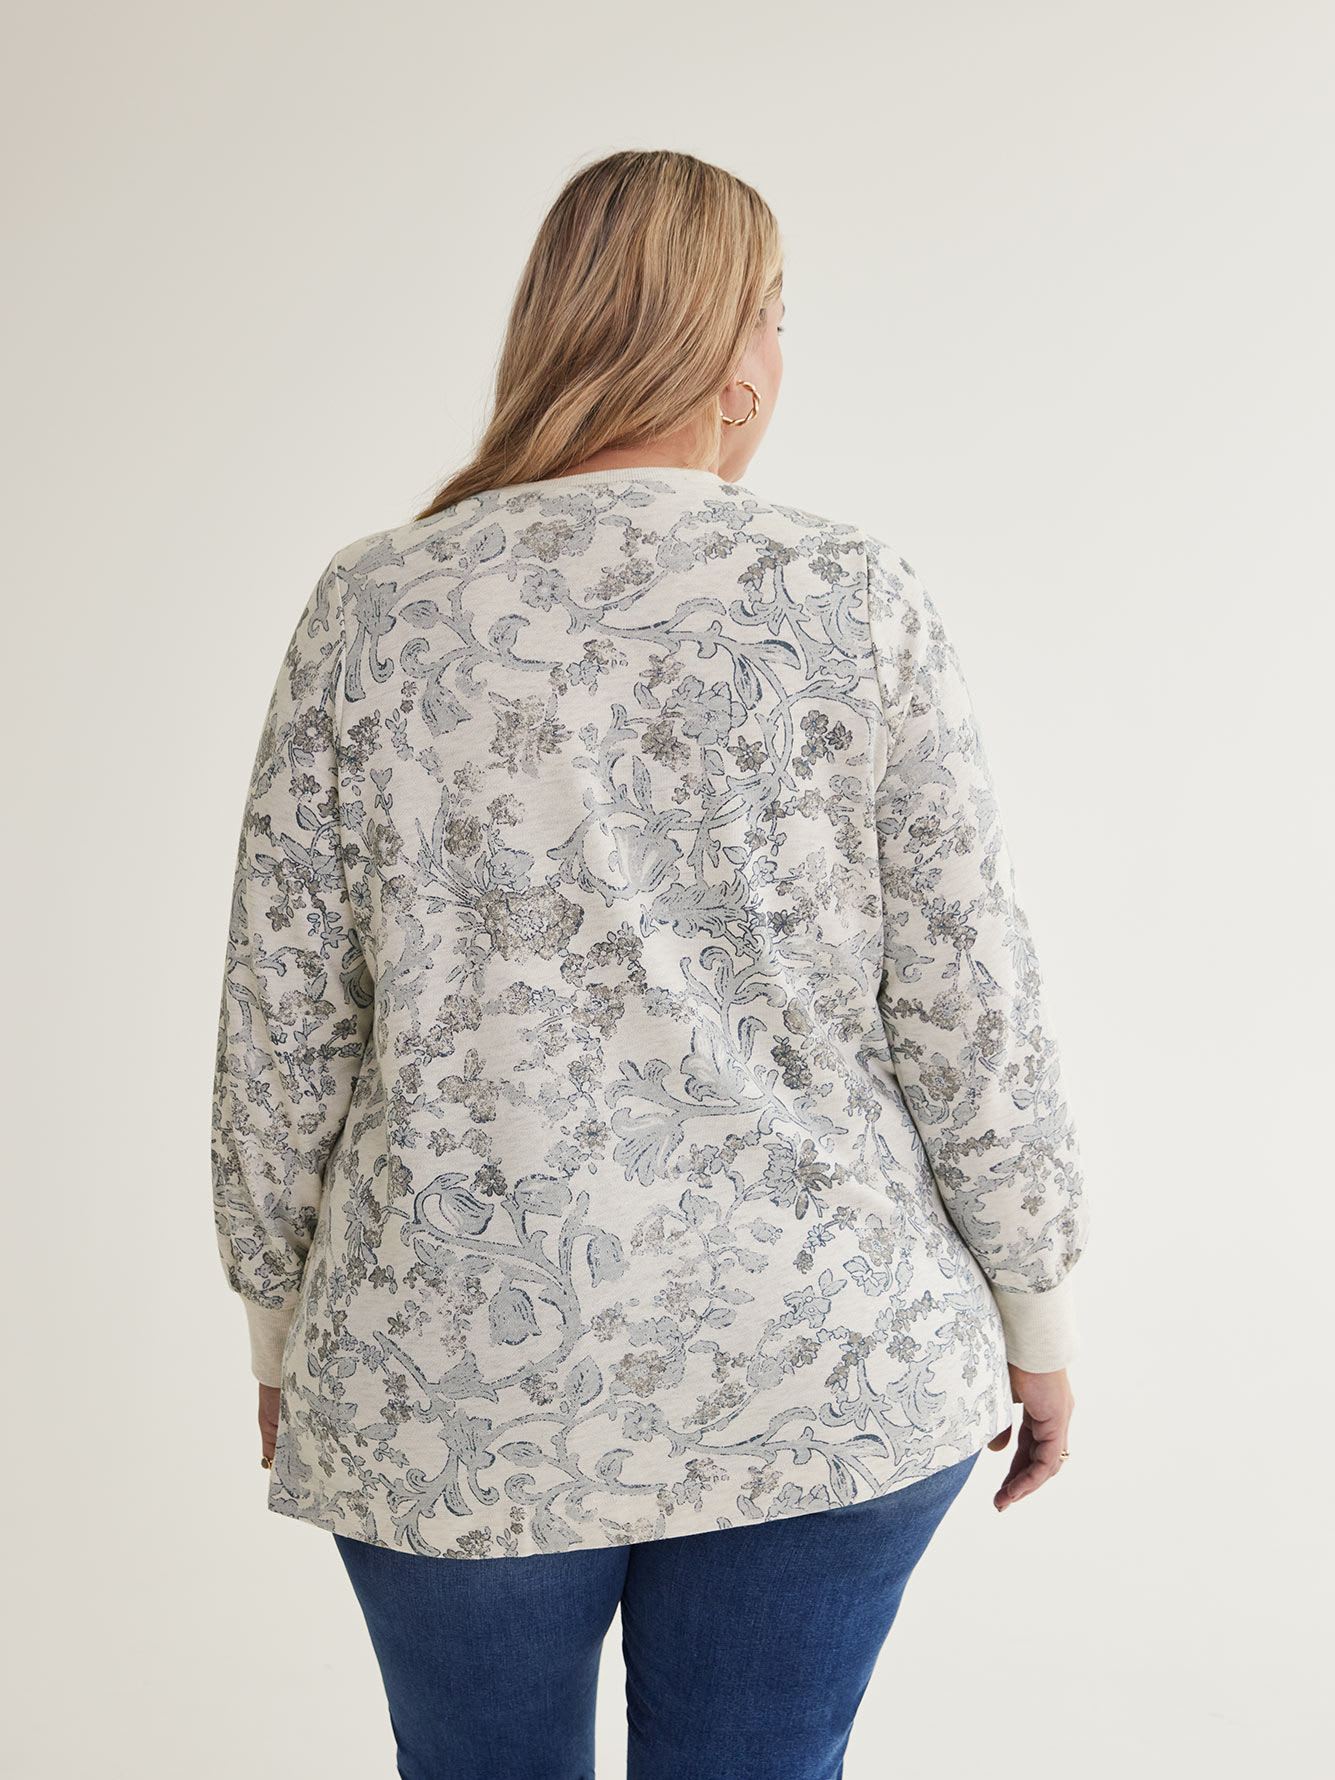 Floral Print Sweatshirt with Side Slits | Penningtons